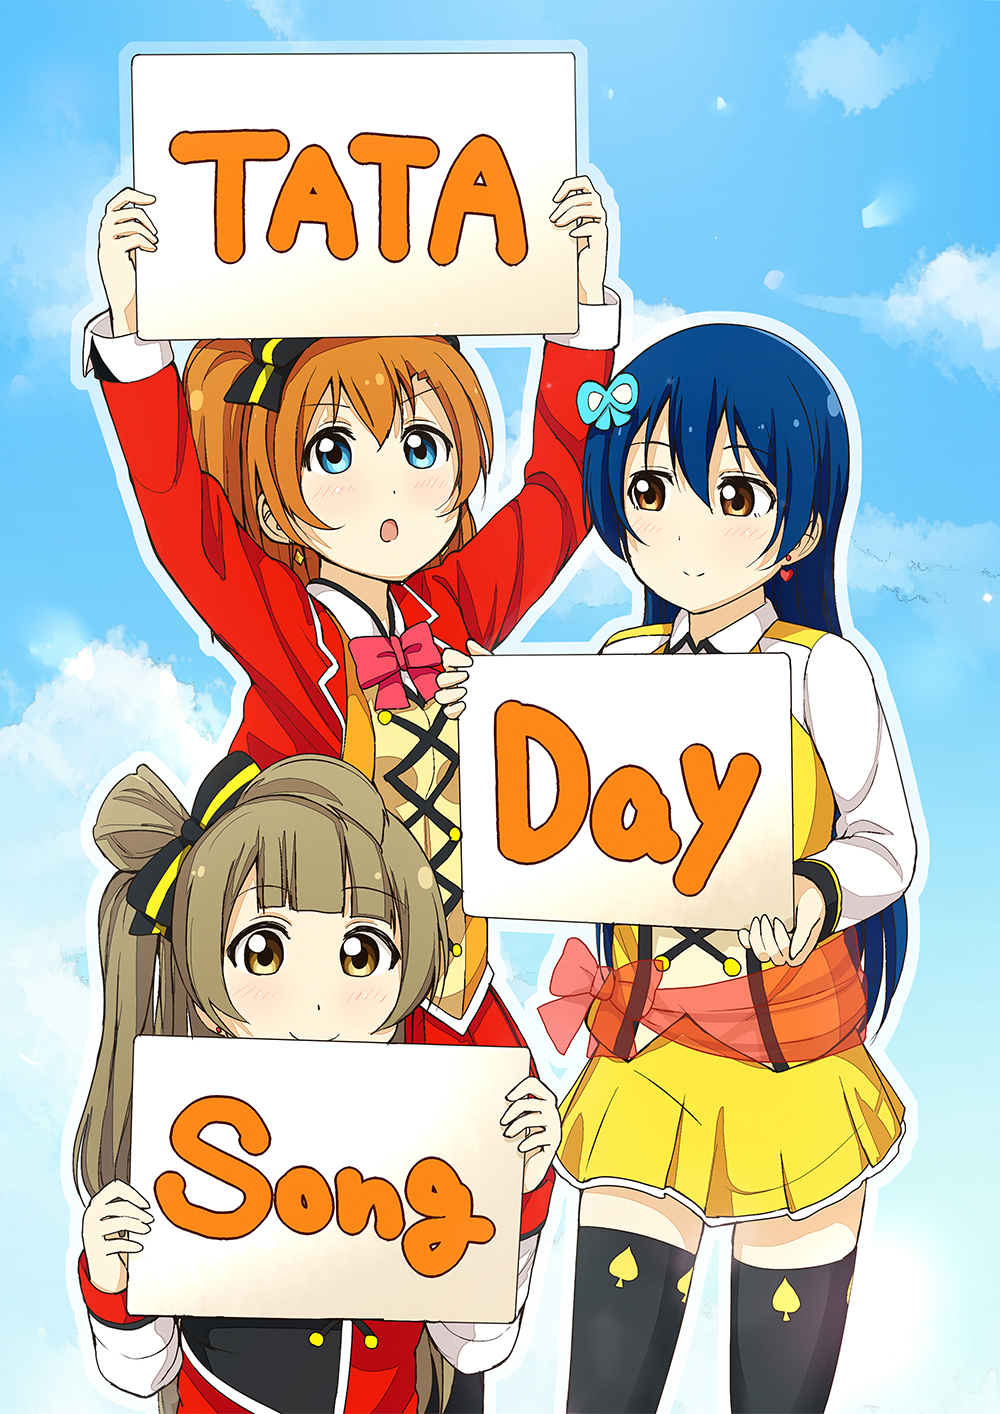 TATA Day Song